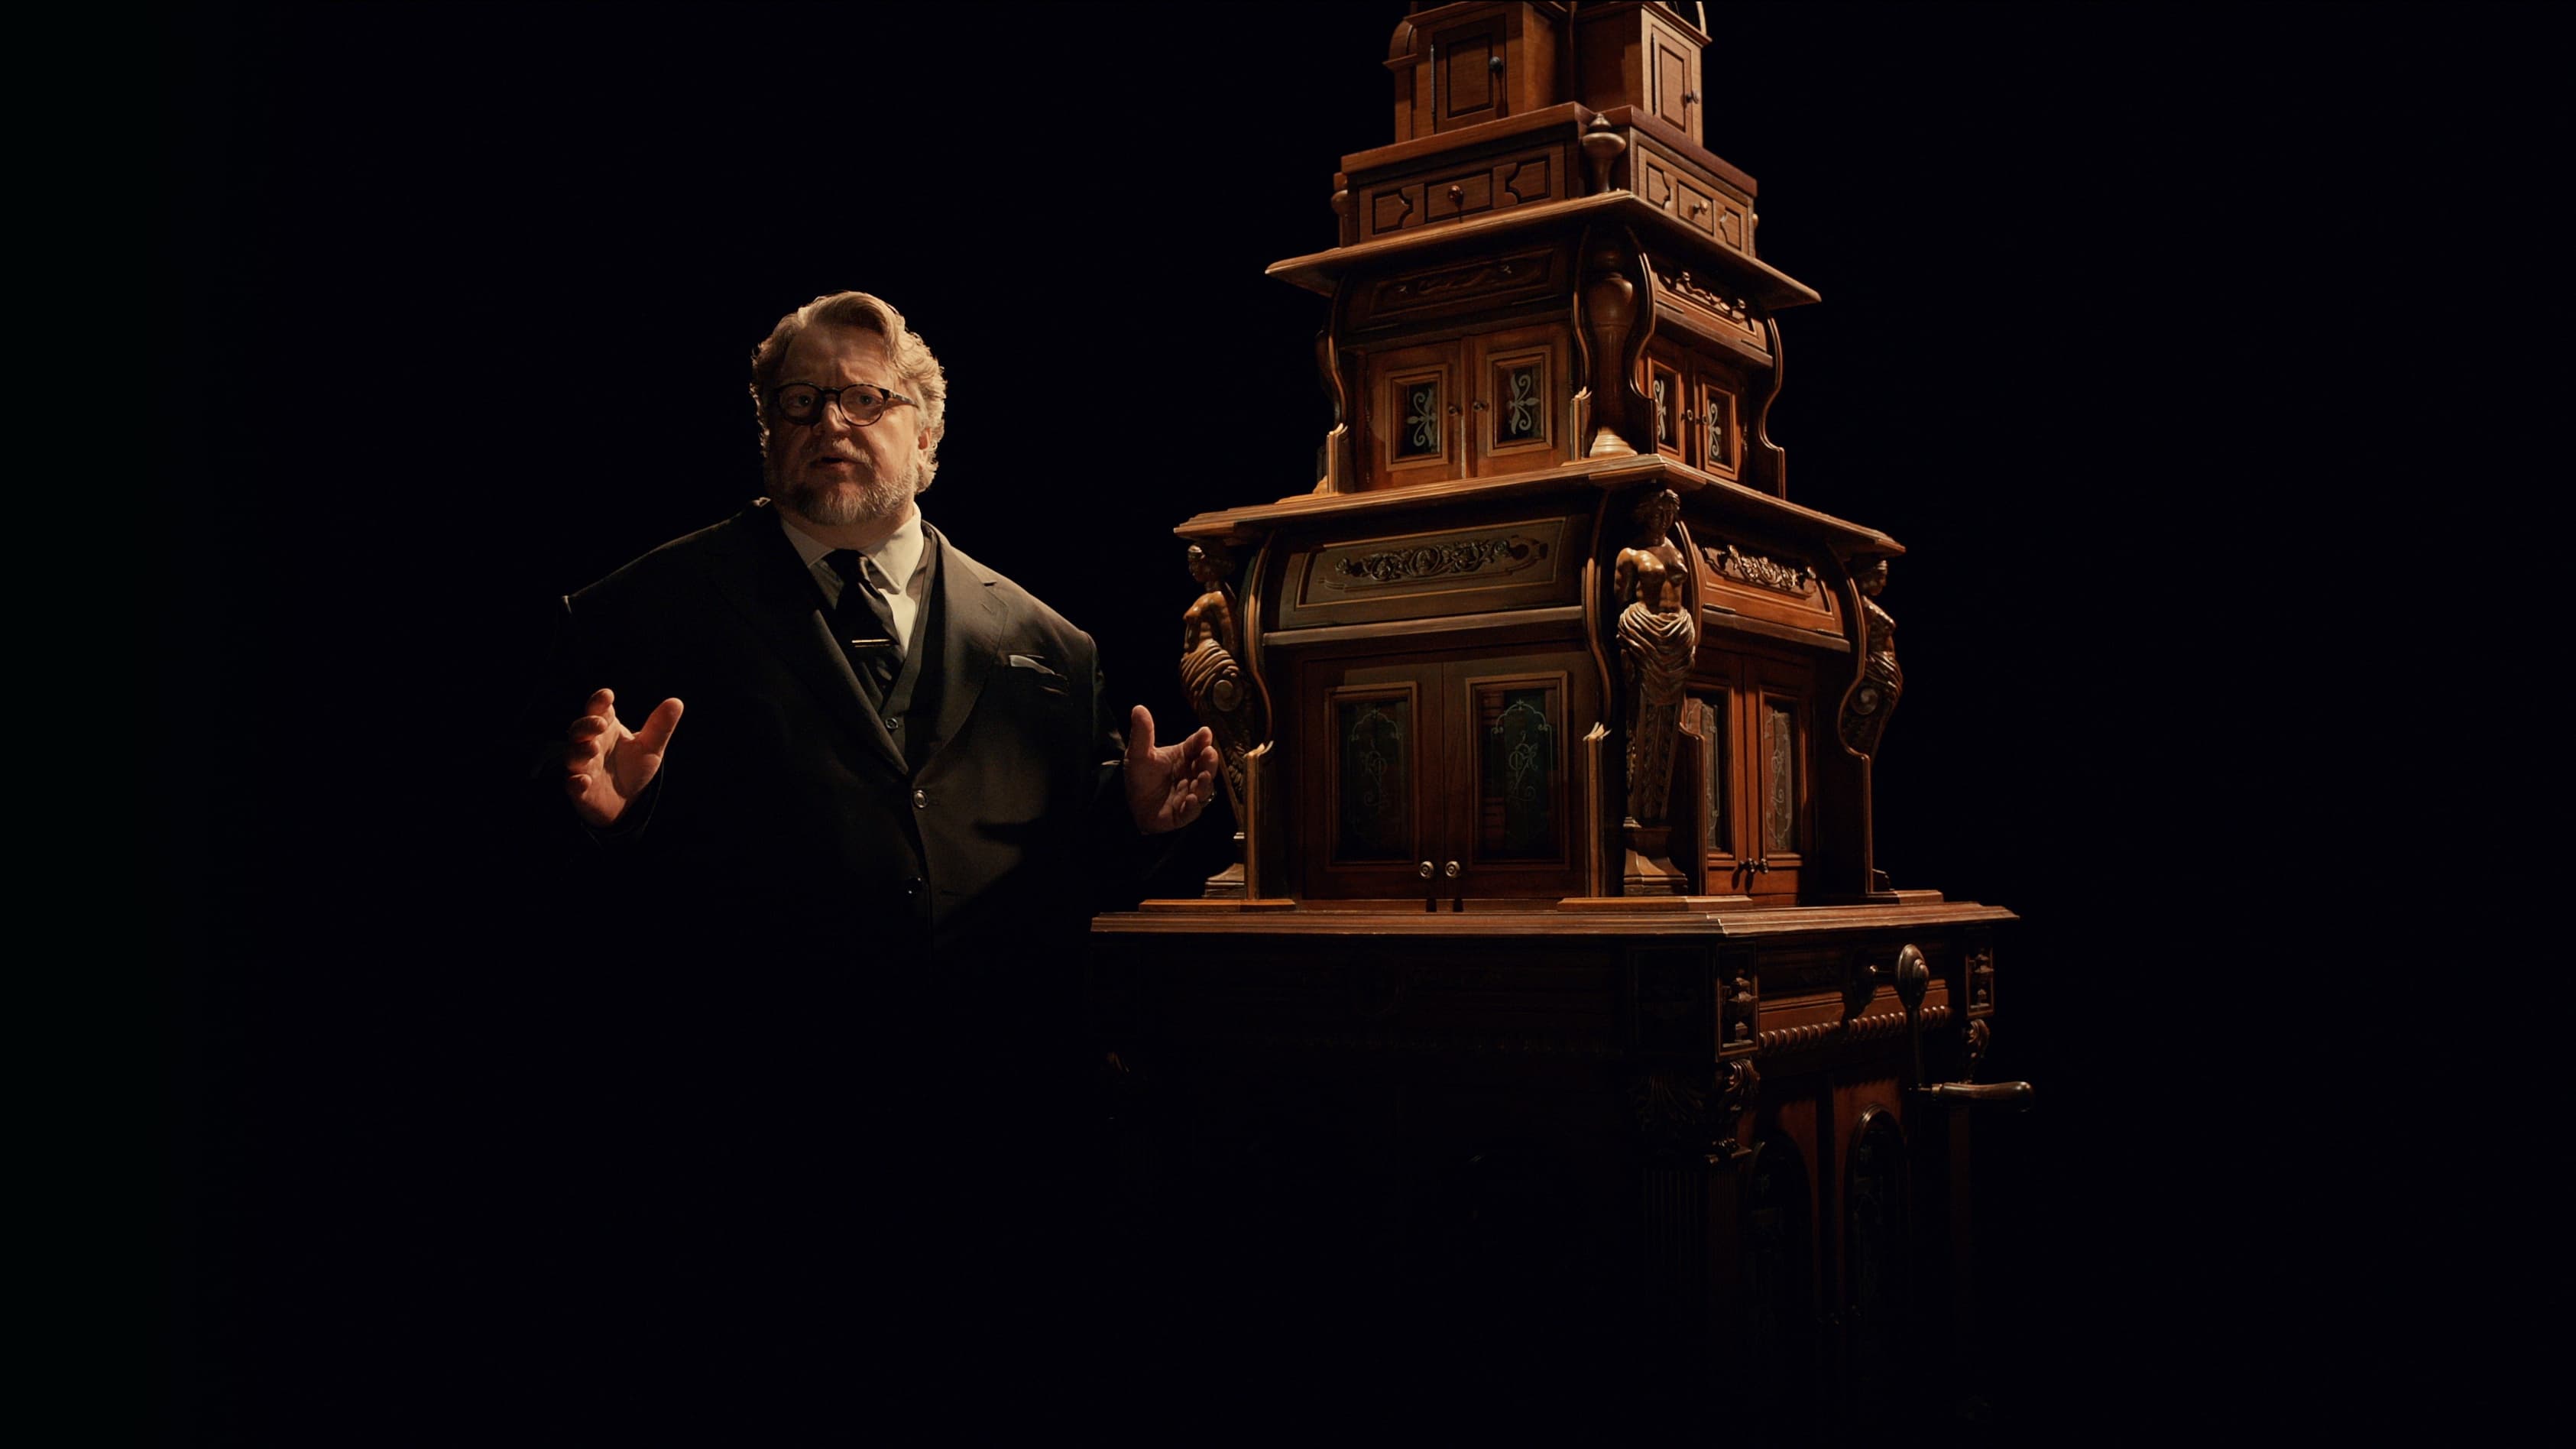 Guillermo del Toro's Cabinet of Curiosities izle